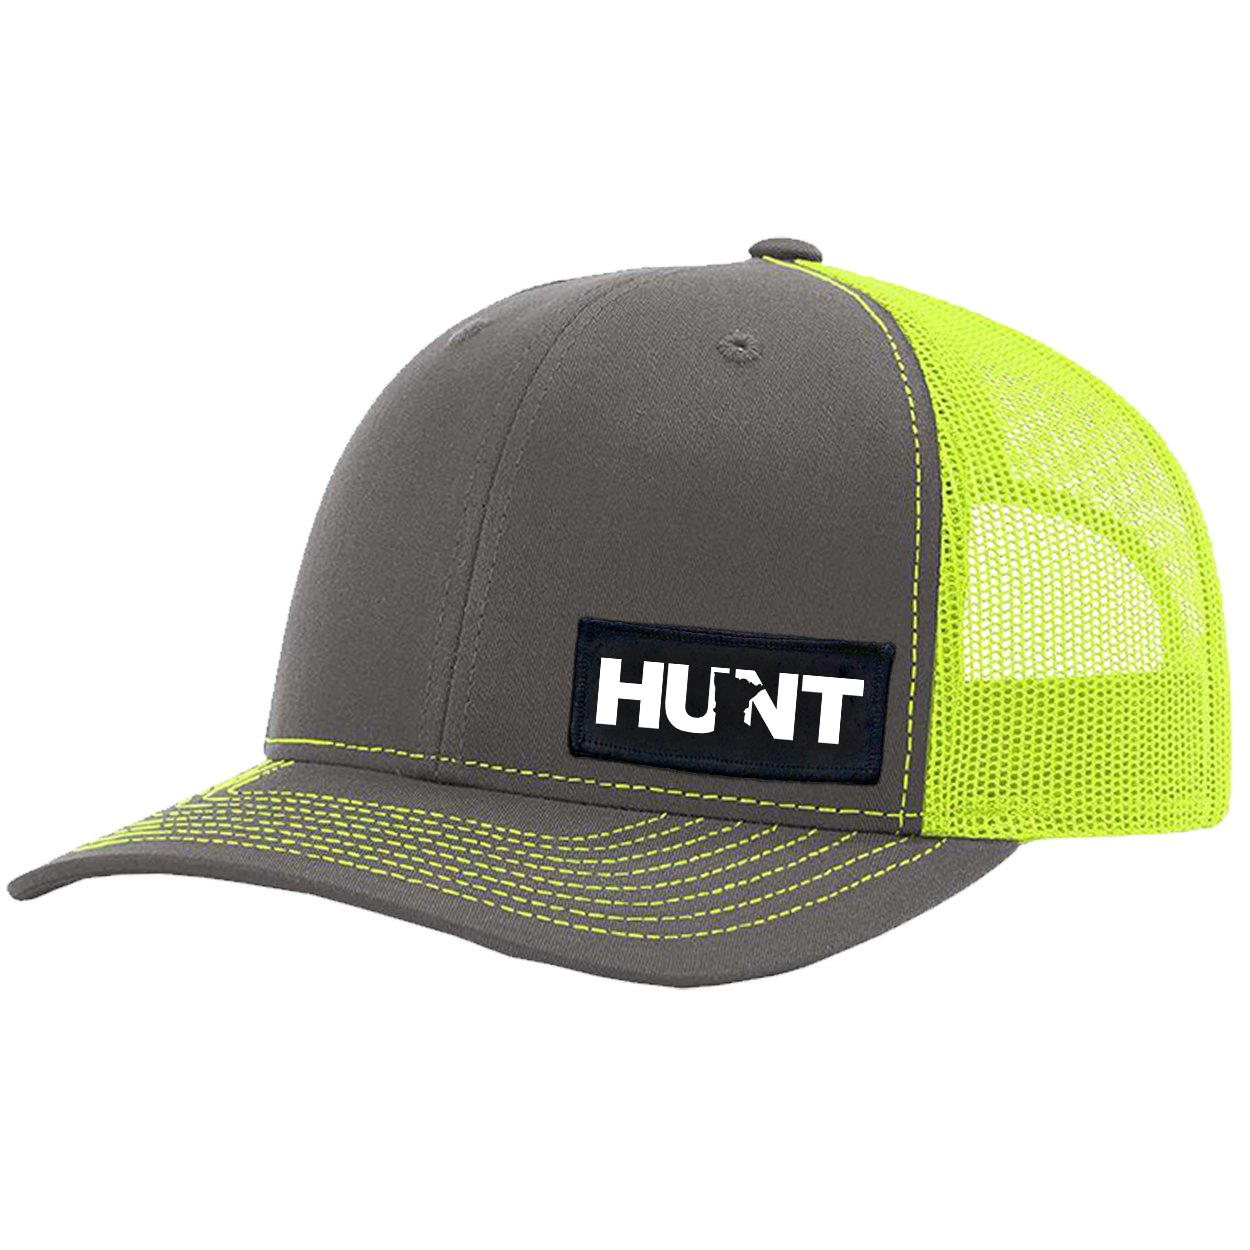 Hunt Minnesota Night Out Woven Patch Snapback Trucker Hat Gray/Neon Yellow (White Logo)